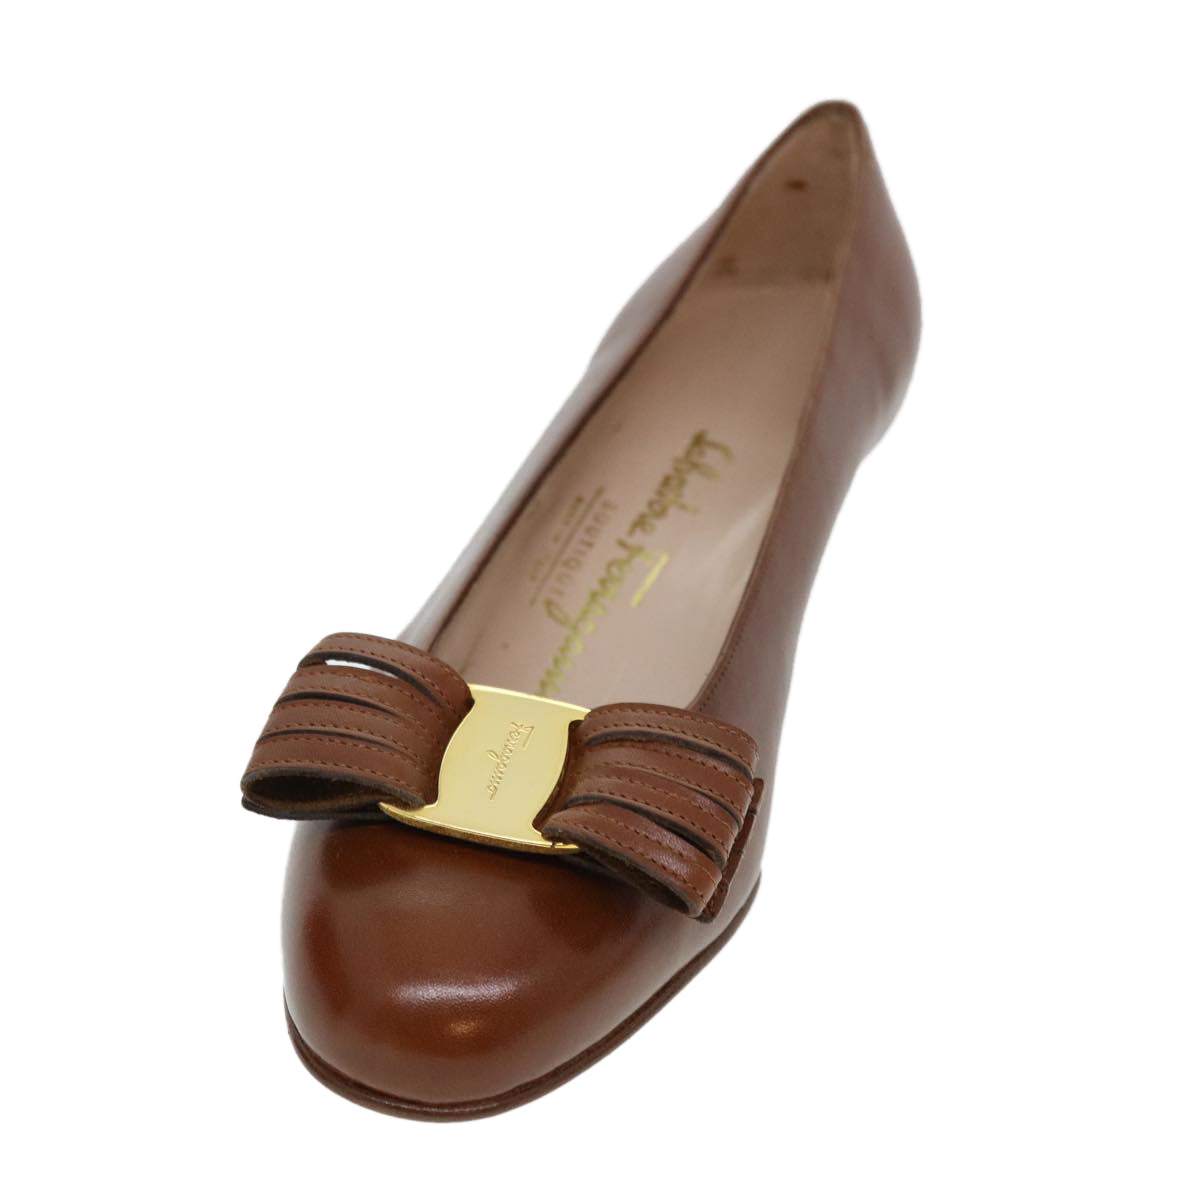 Salvatore Ferragamo shoes Leather Brown Auth 37994 - 0